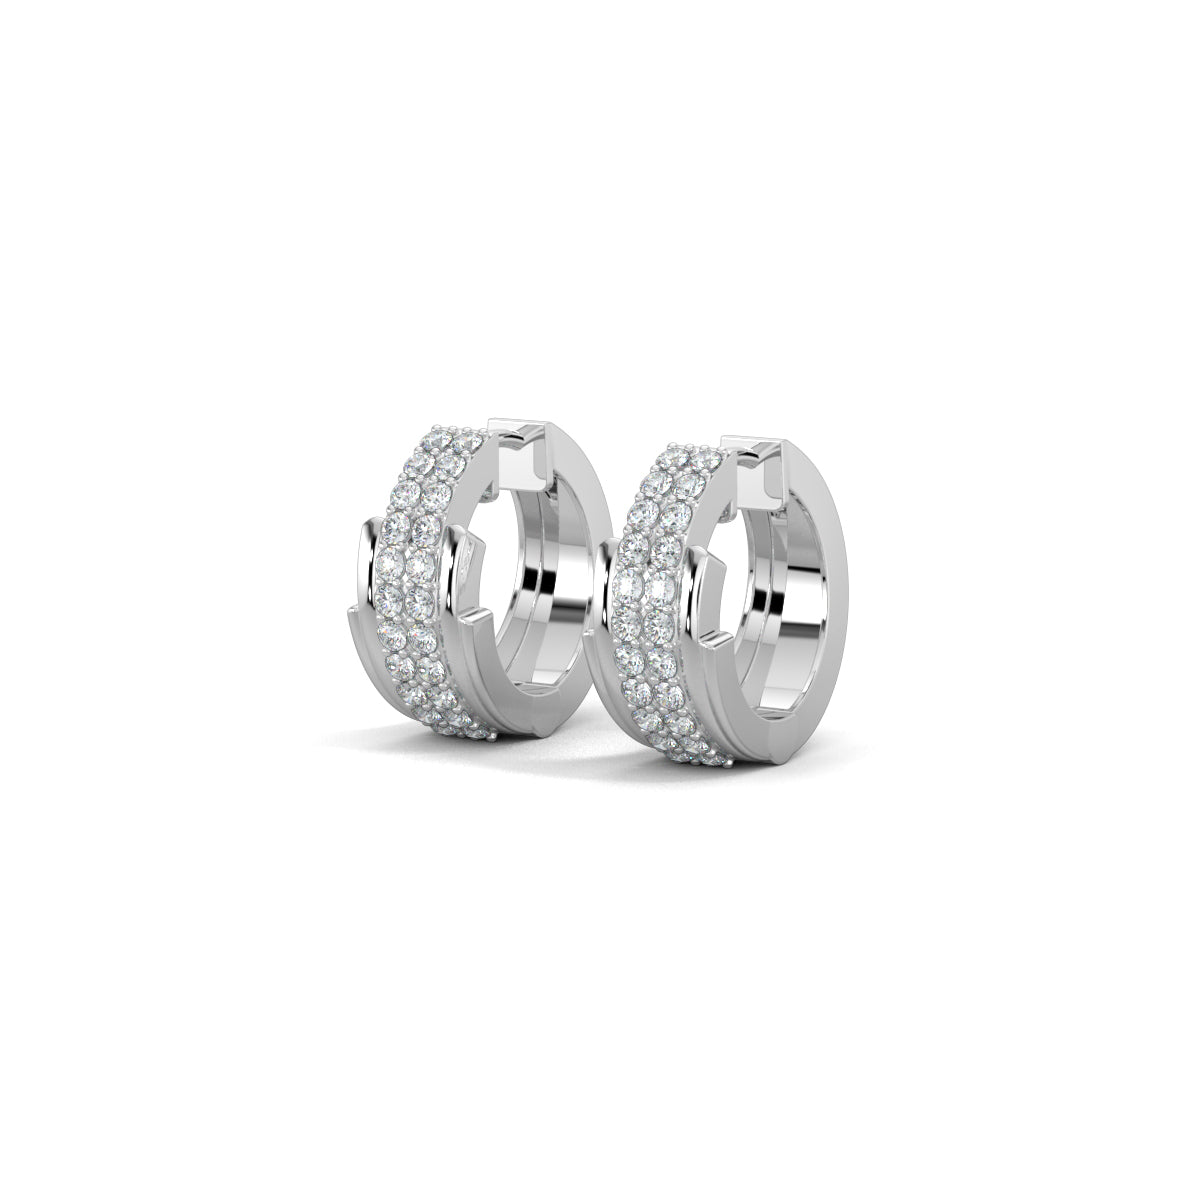 White Gold, Diamond Earrings, Bali Bliss Diamond Earrings, natural diamonds, lab-grown diamonds, pave-set round diamonds, elegant earrings, sophisticated jewelry, statement earrings, glamorous accessories.